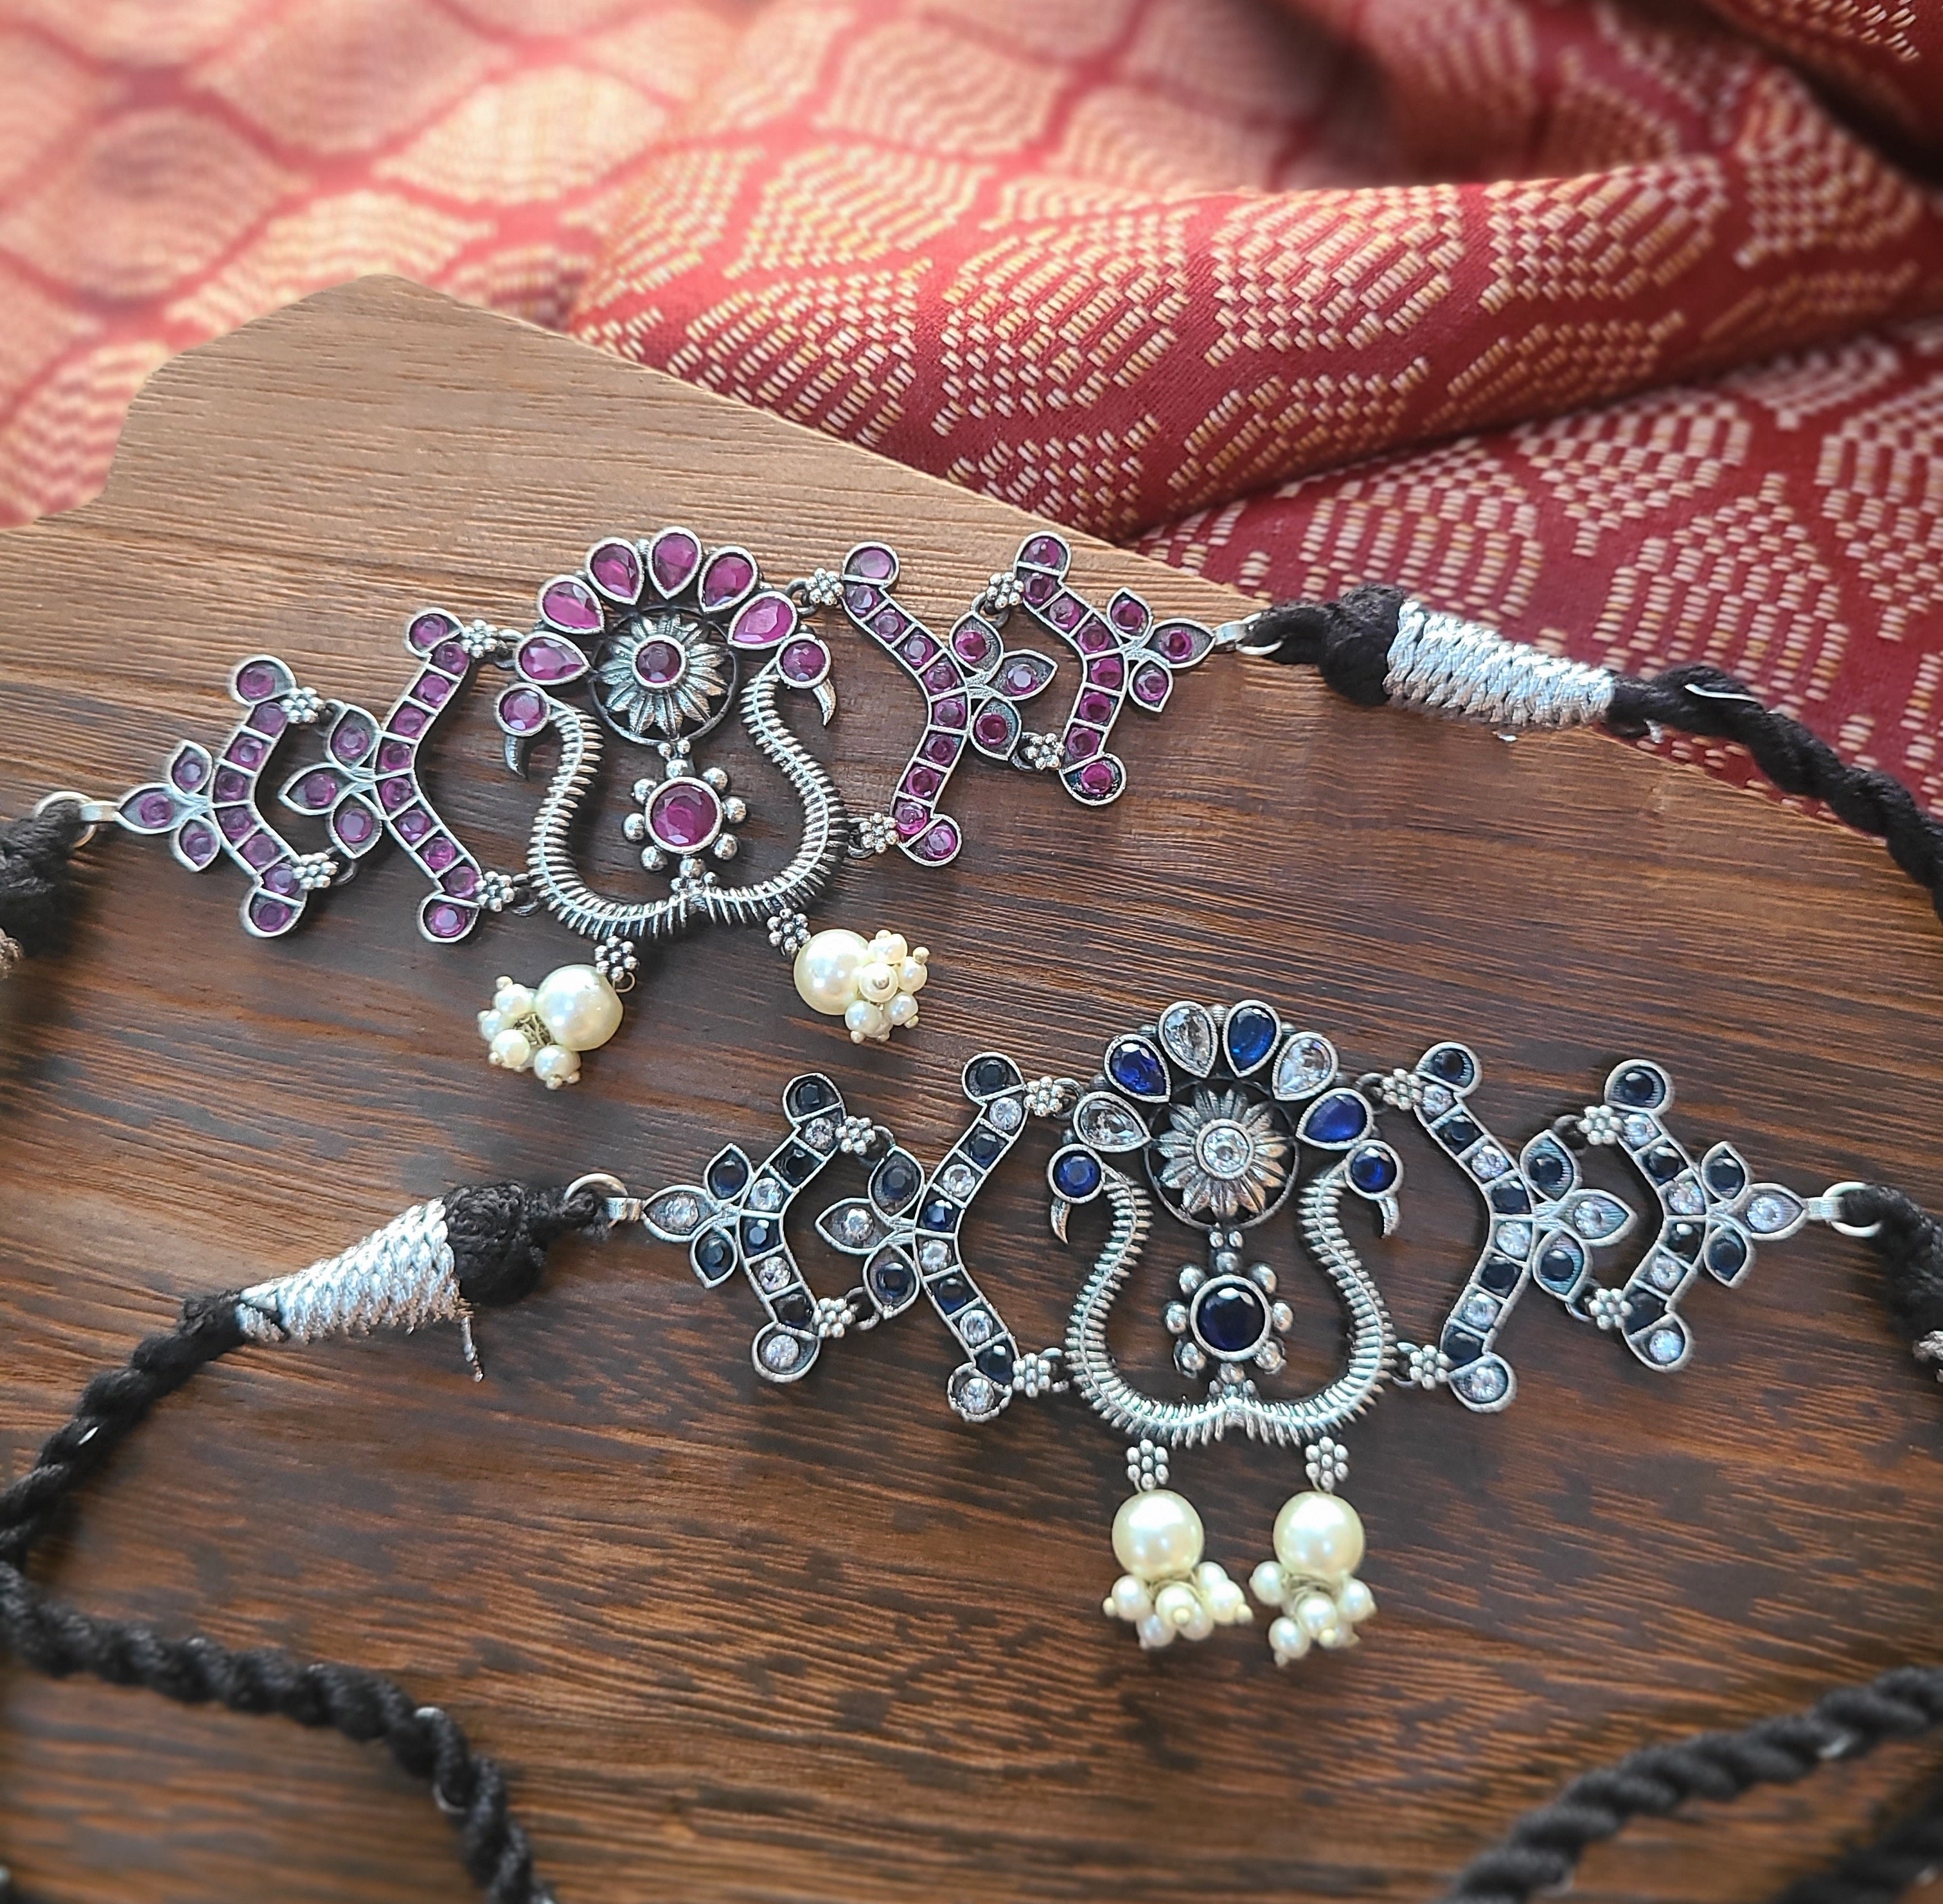 Arna Silver Alike choker Necklace set